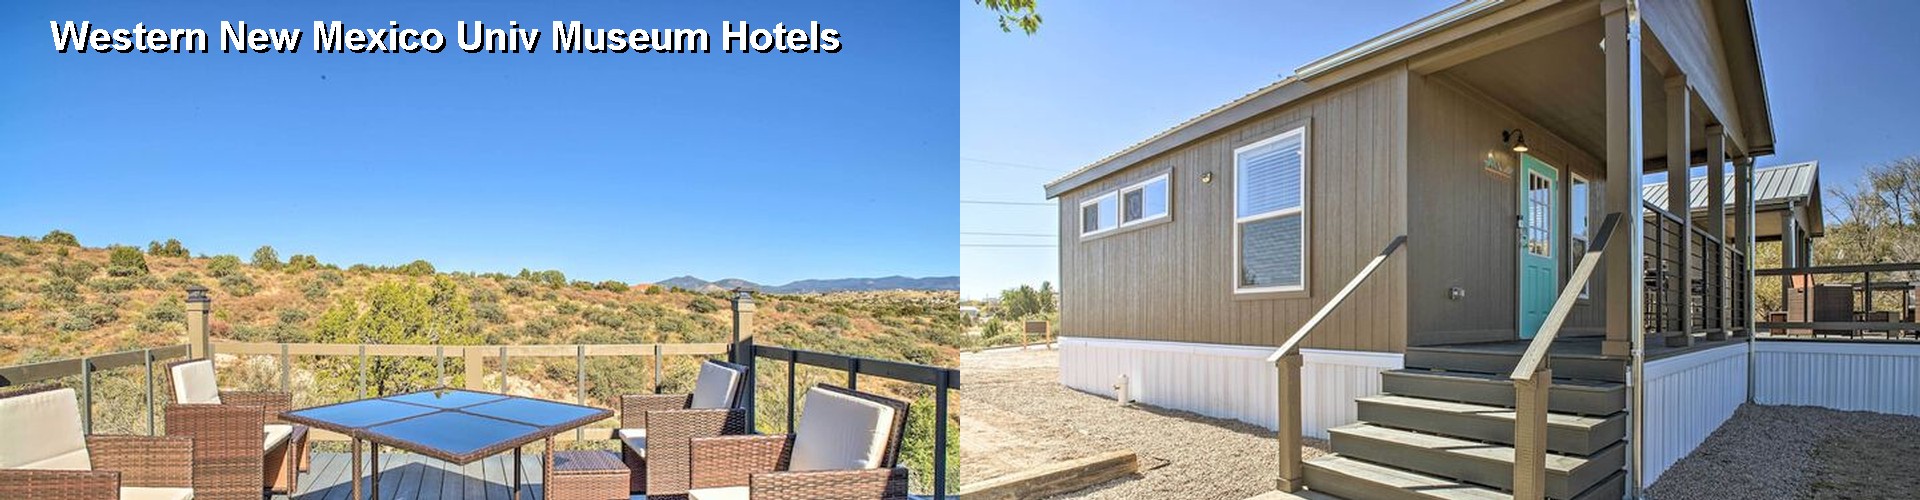 3 Best Hotels near Western New Mexico Univ Museum